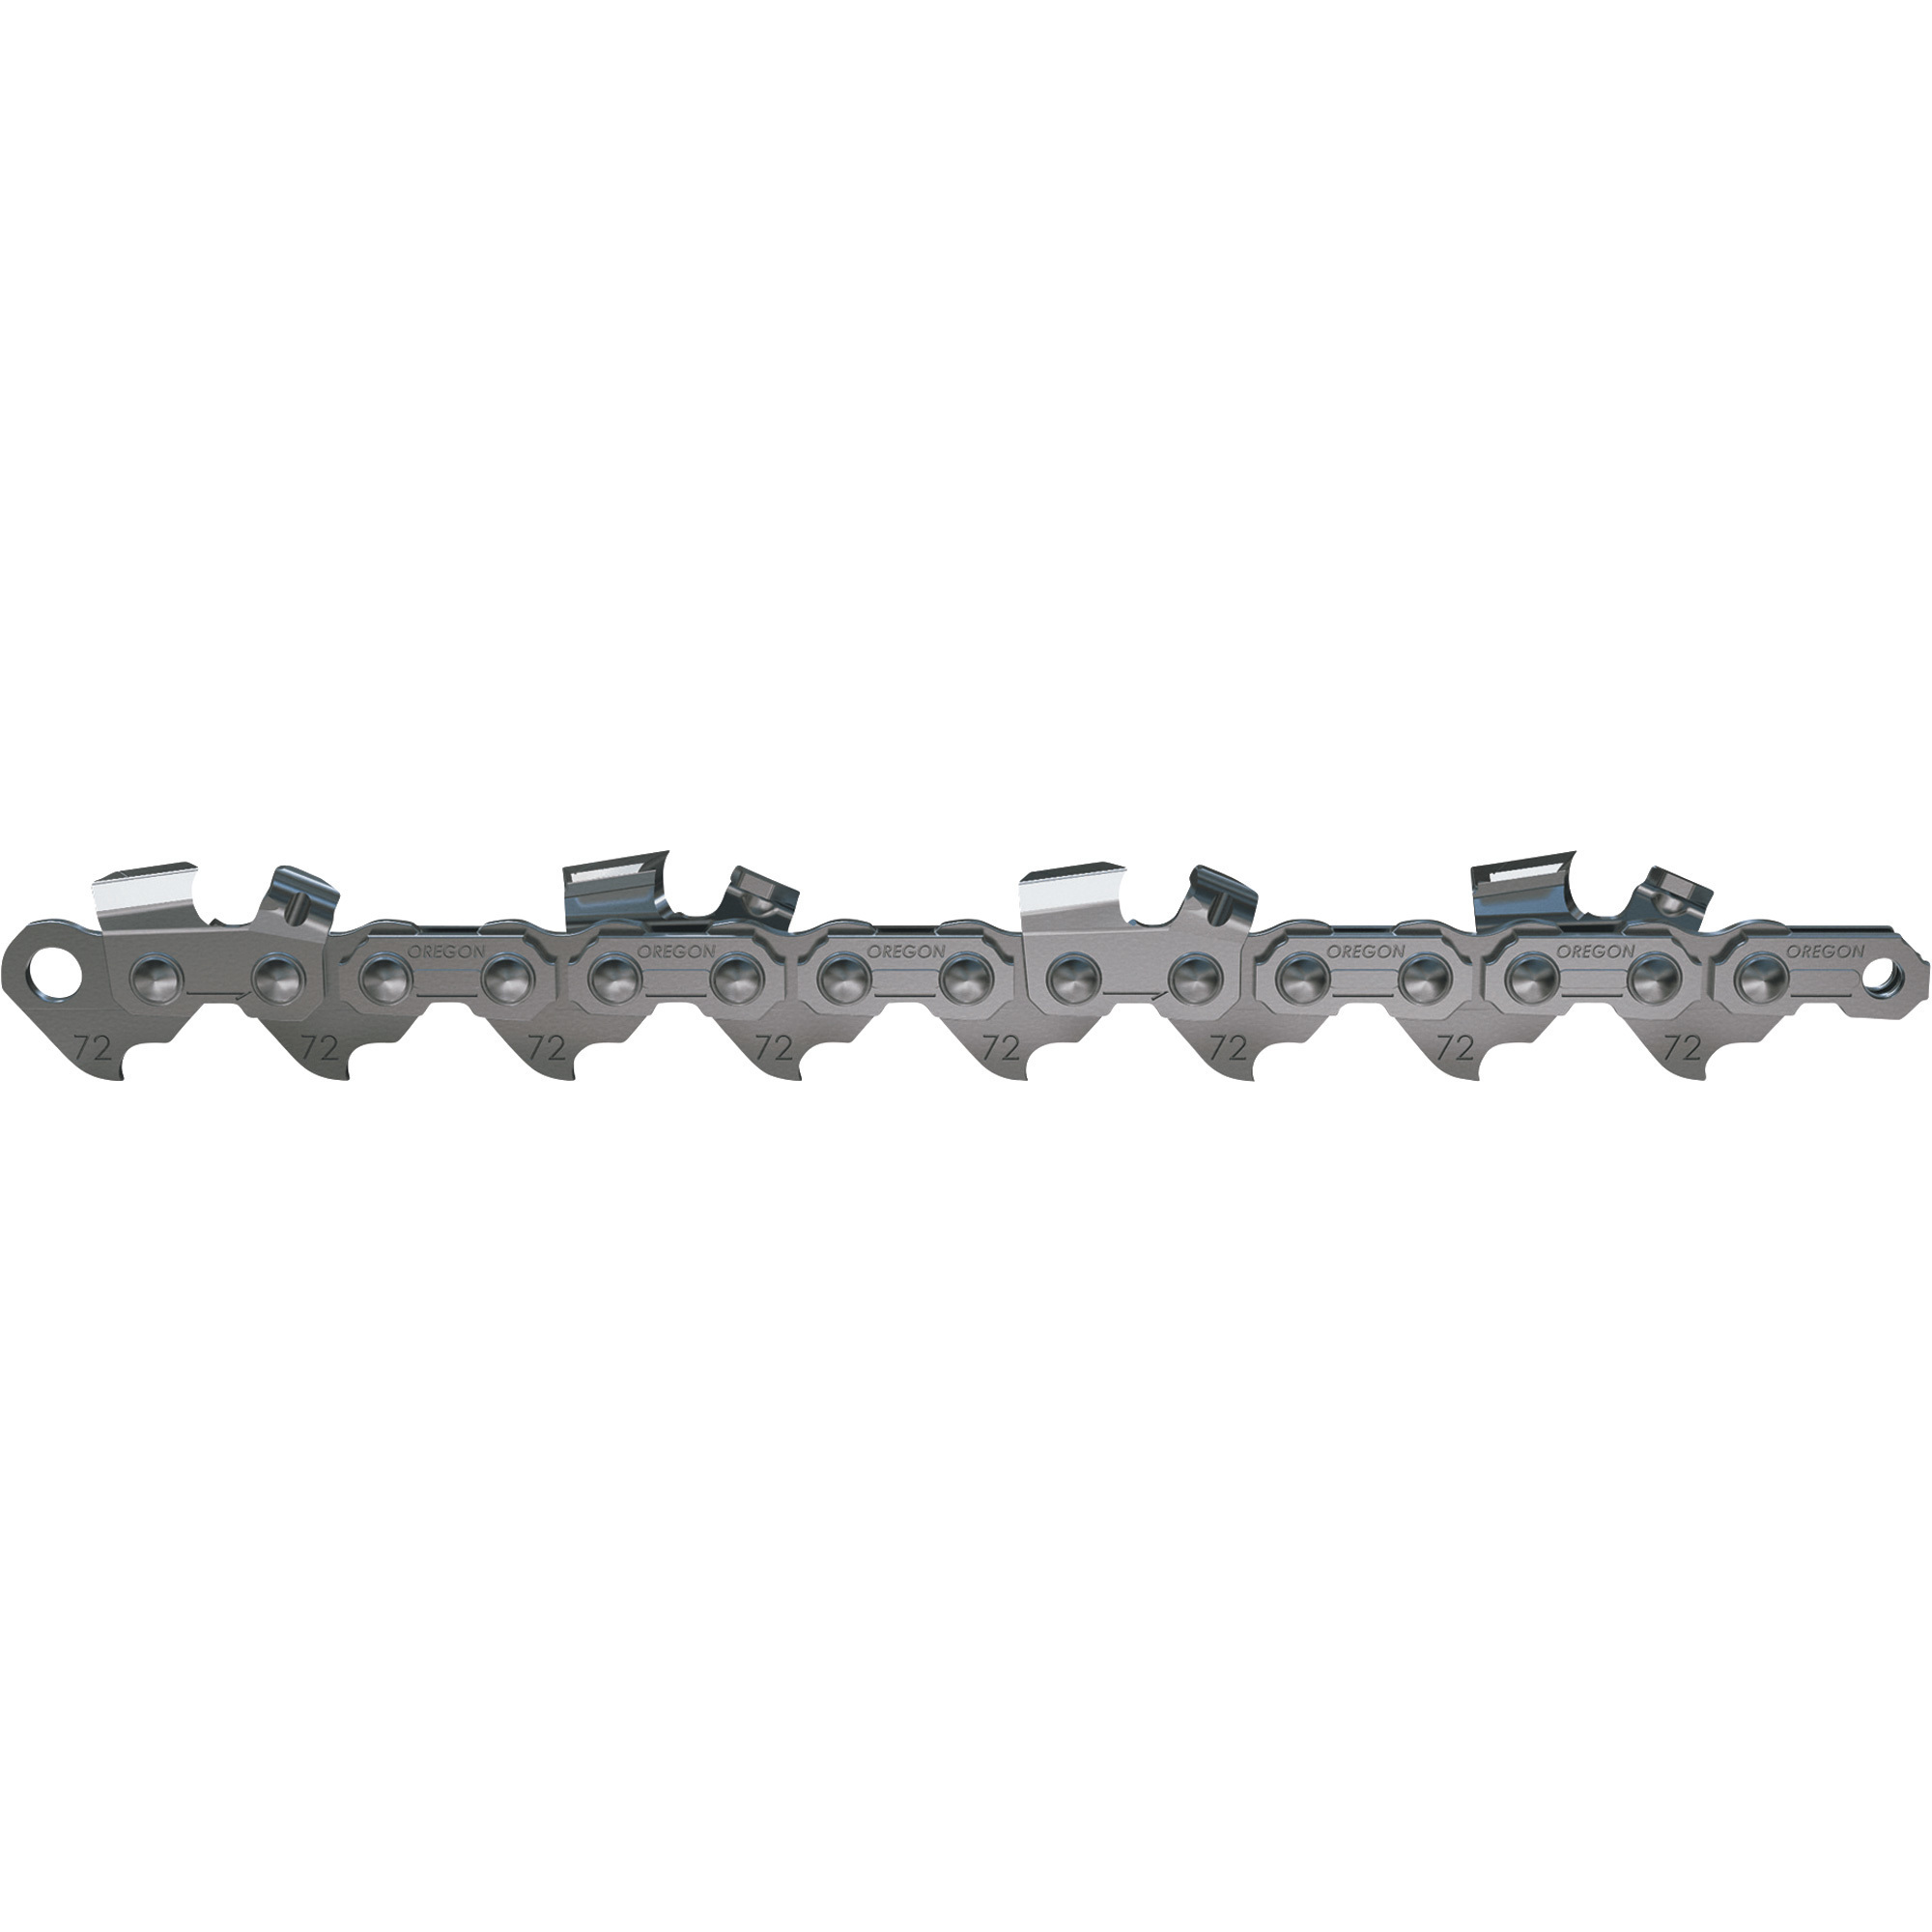 Oregon Low Kickback Chainsaw Chain, 3/8Inch x 0.050Inch, Fits 18Inch Bar, Model D68/72V068G